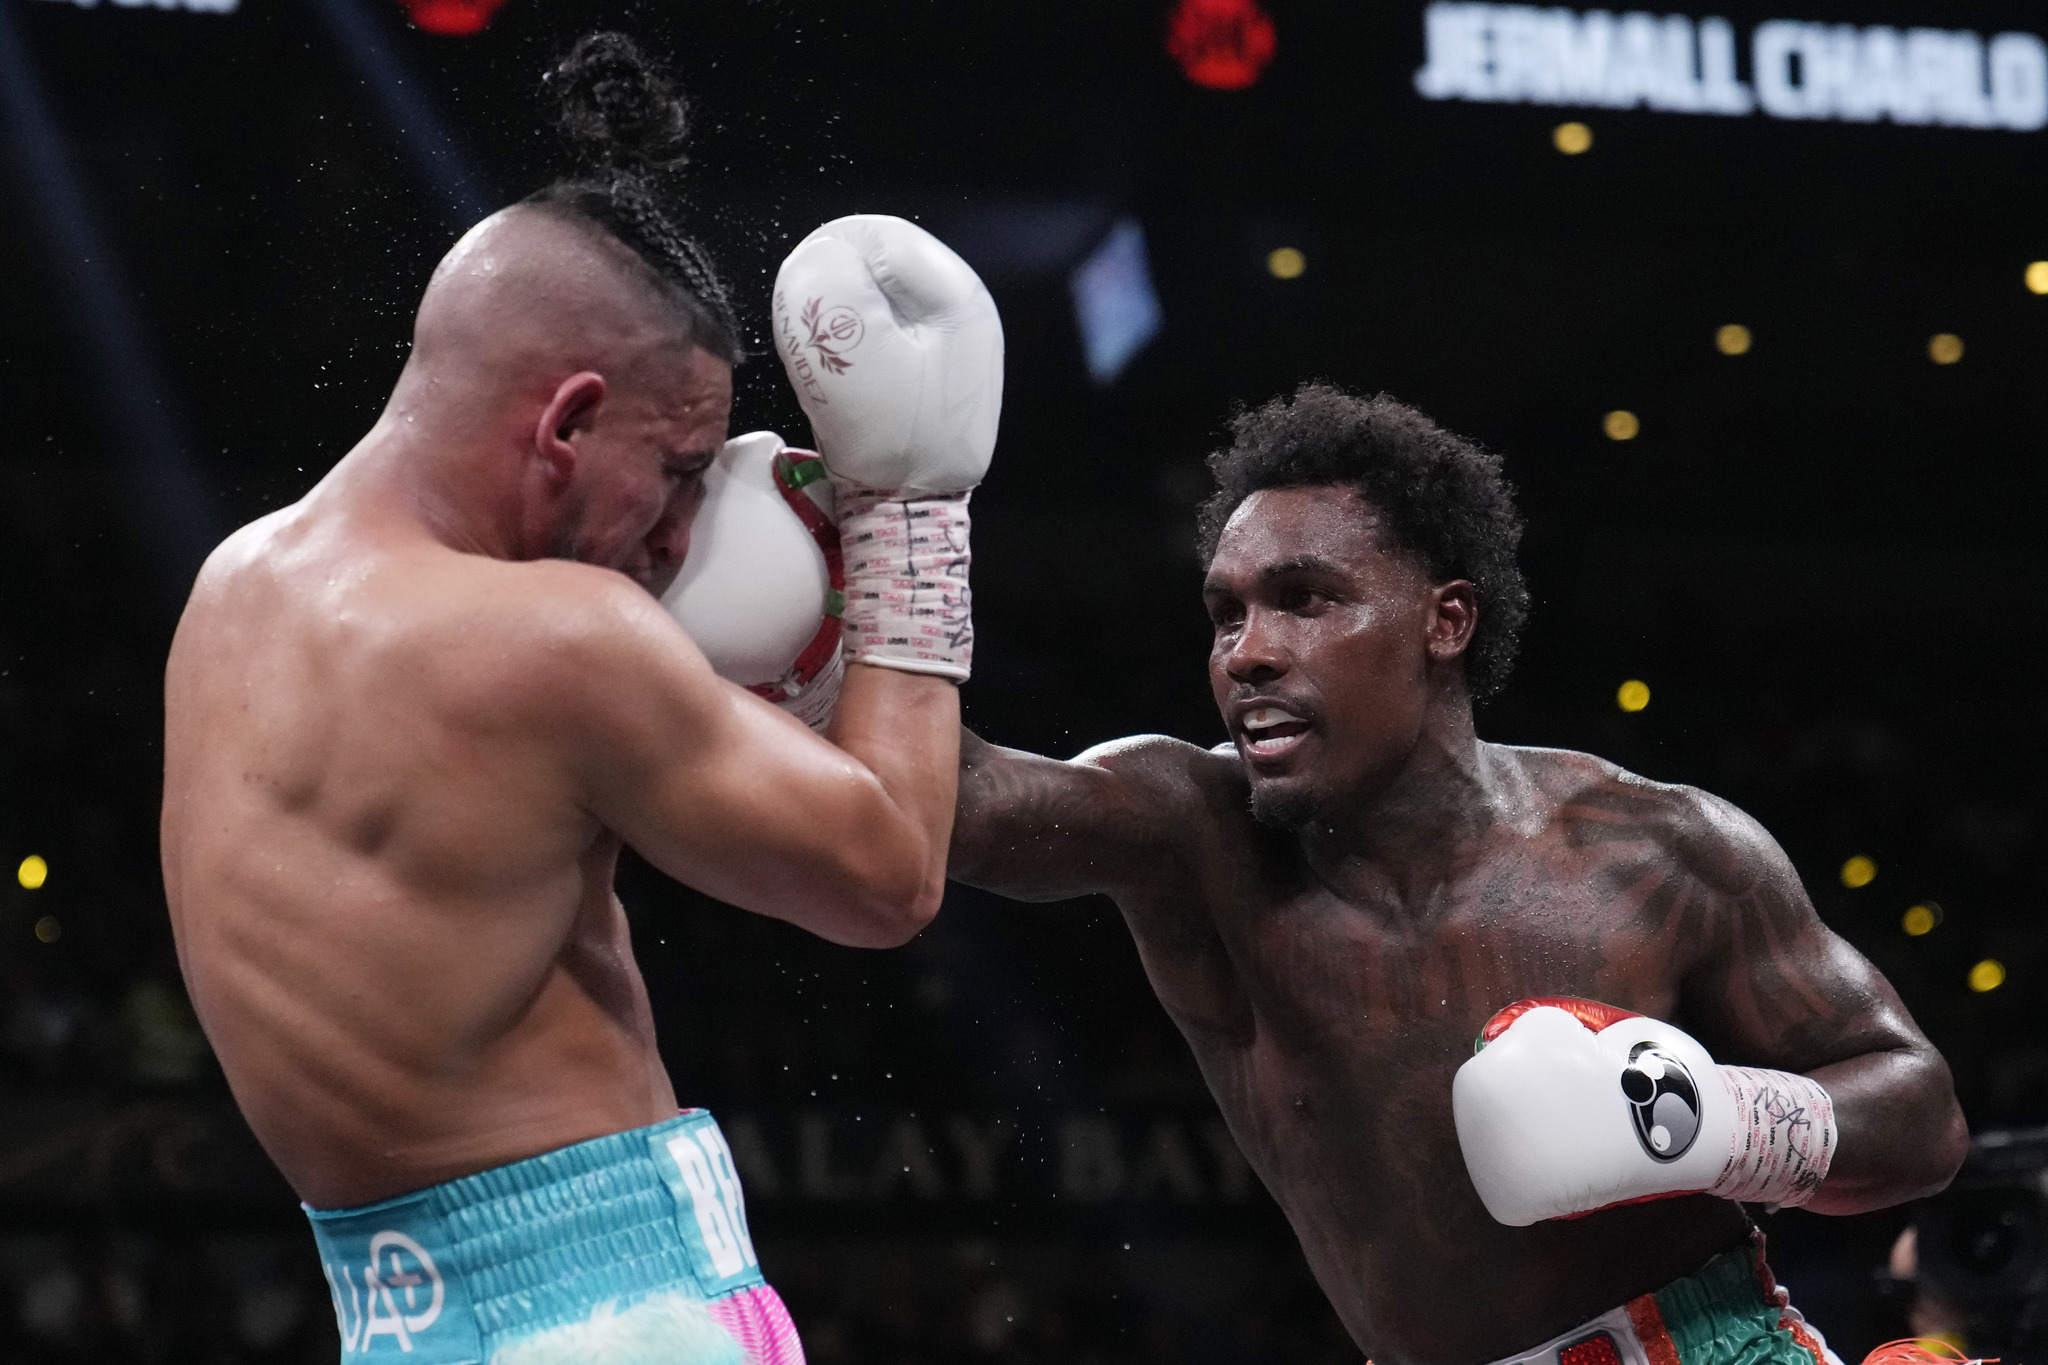 Jermall Charlo hits Jose Benavidez Jr. during a middleweight boxing match